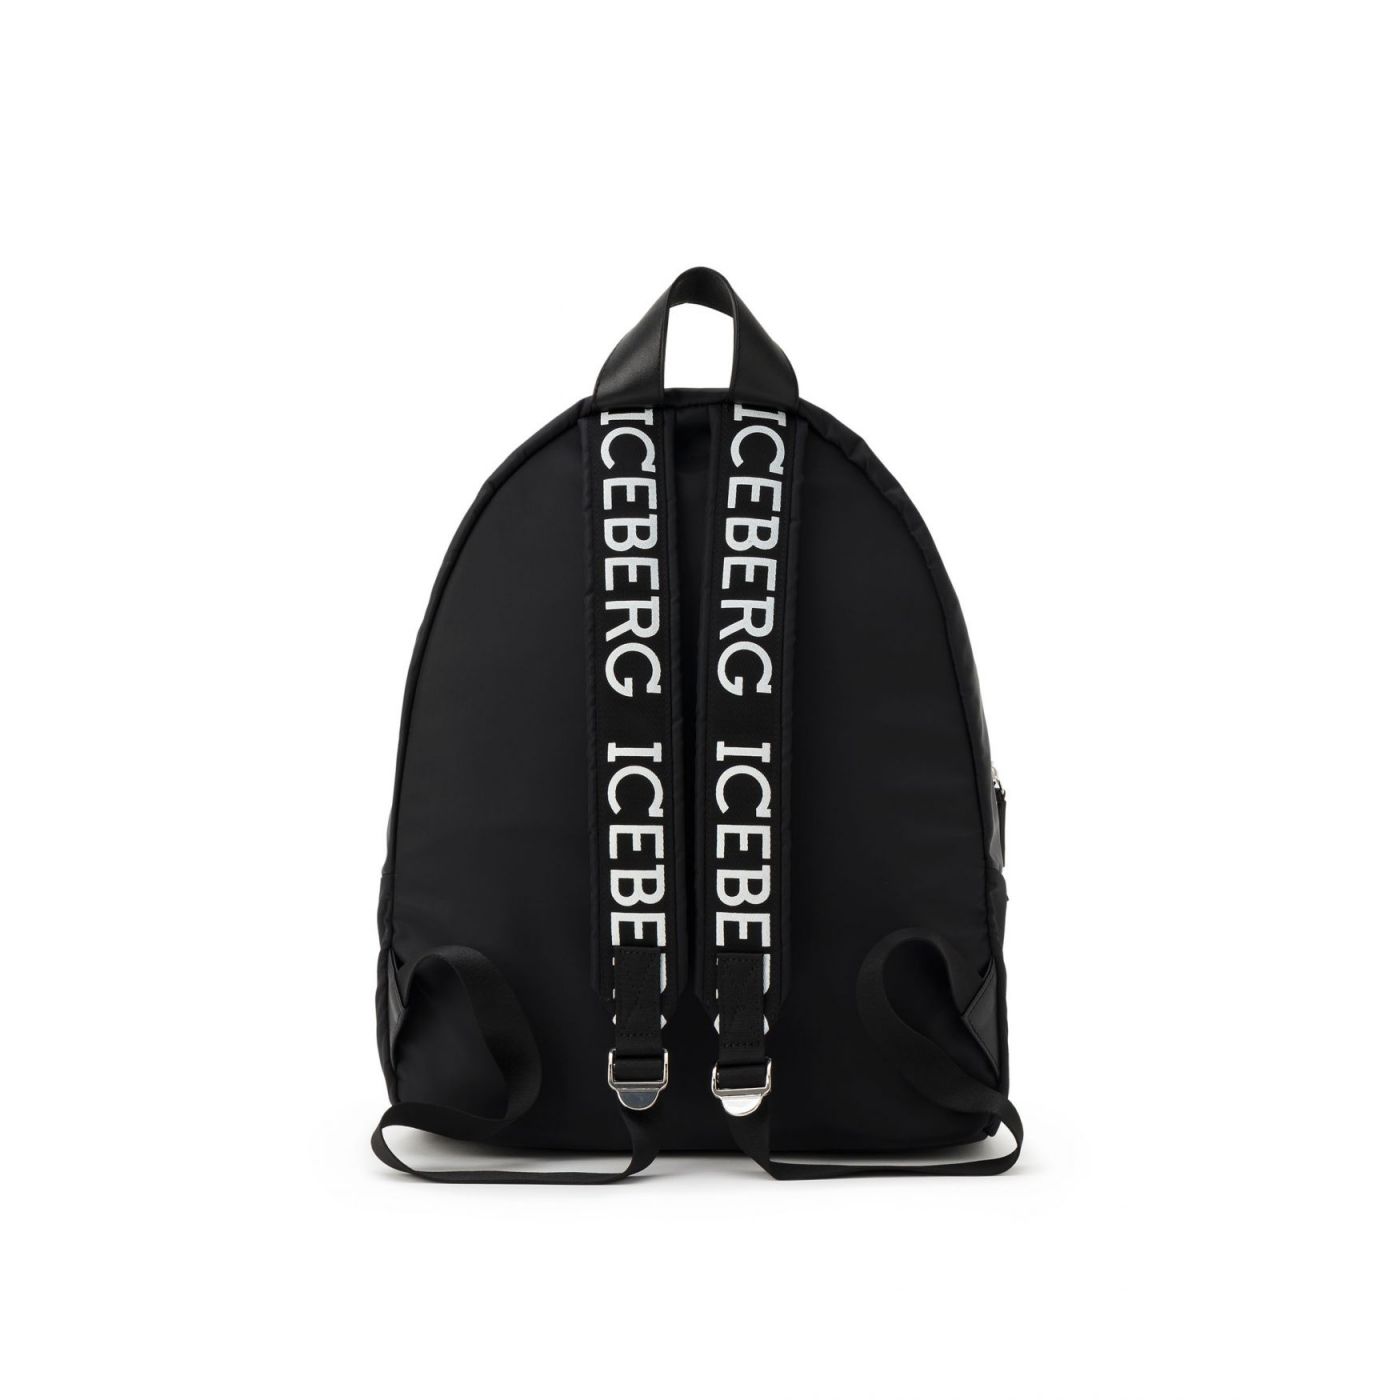 » ICEBERG black backpack with logo on back and straps